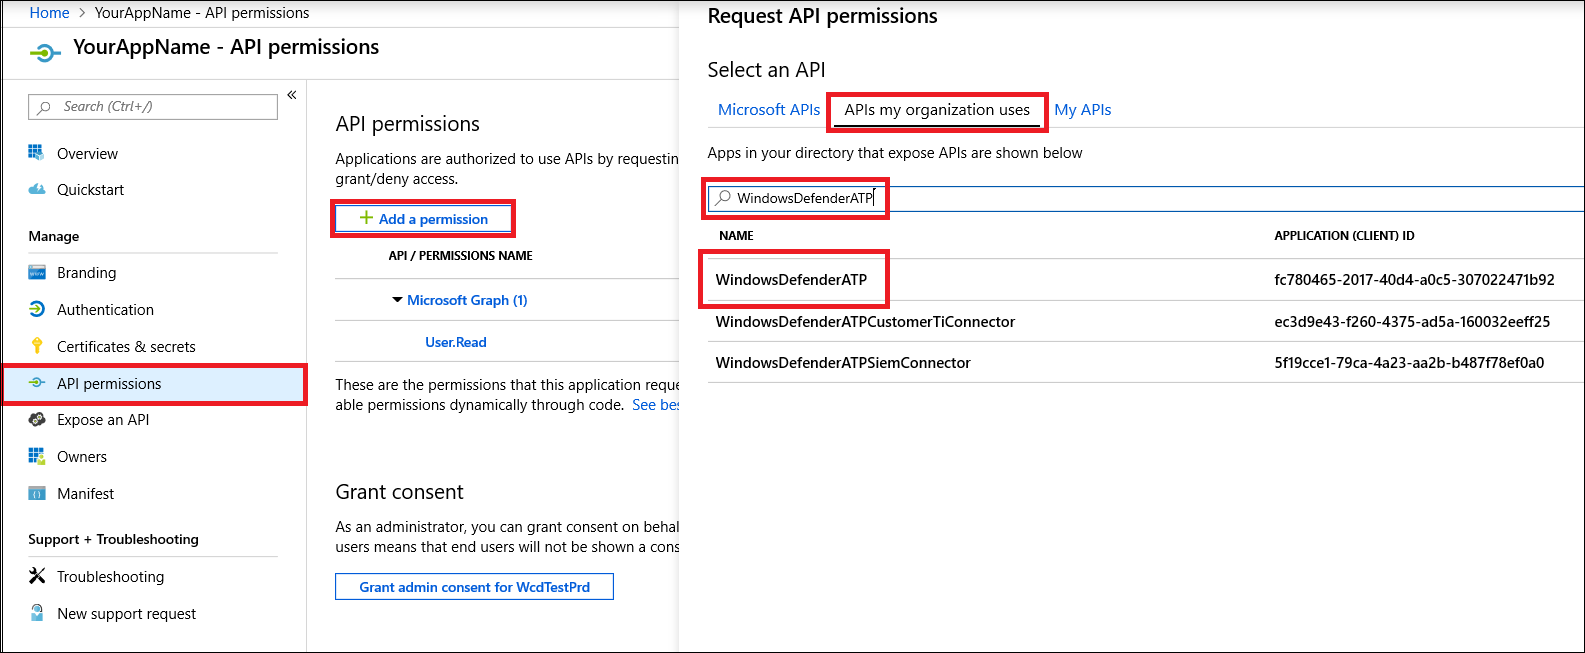 Image of API access and API selection1.